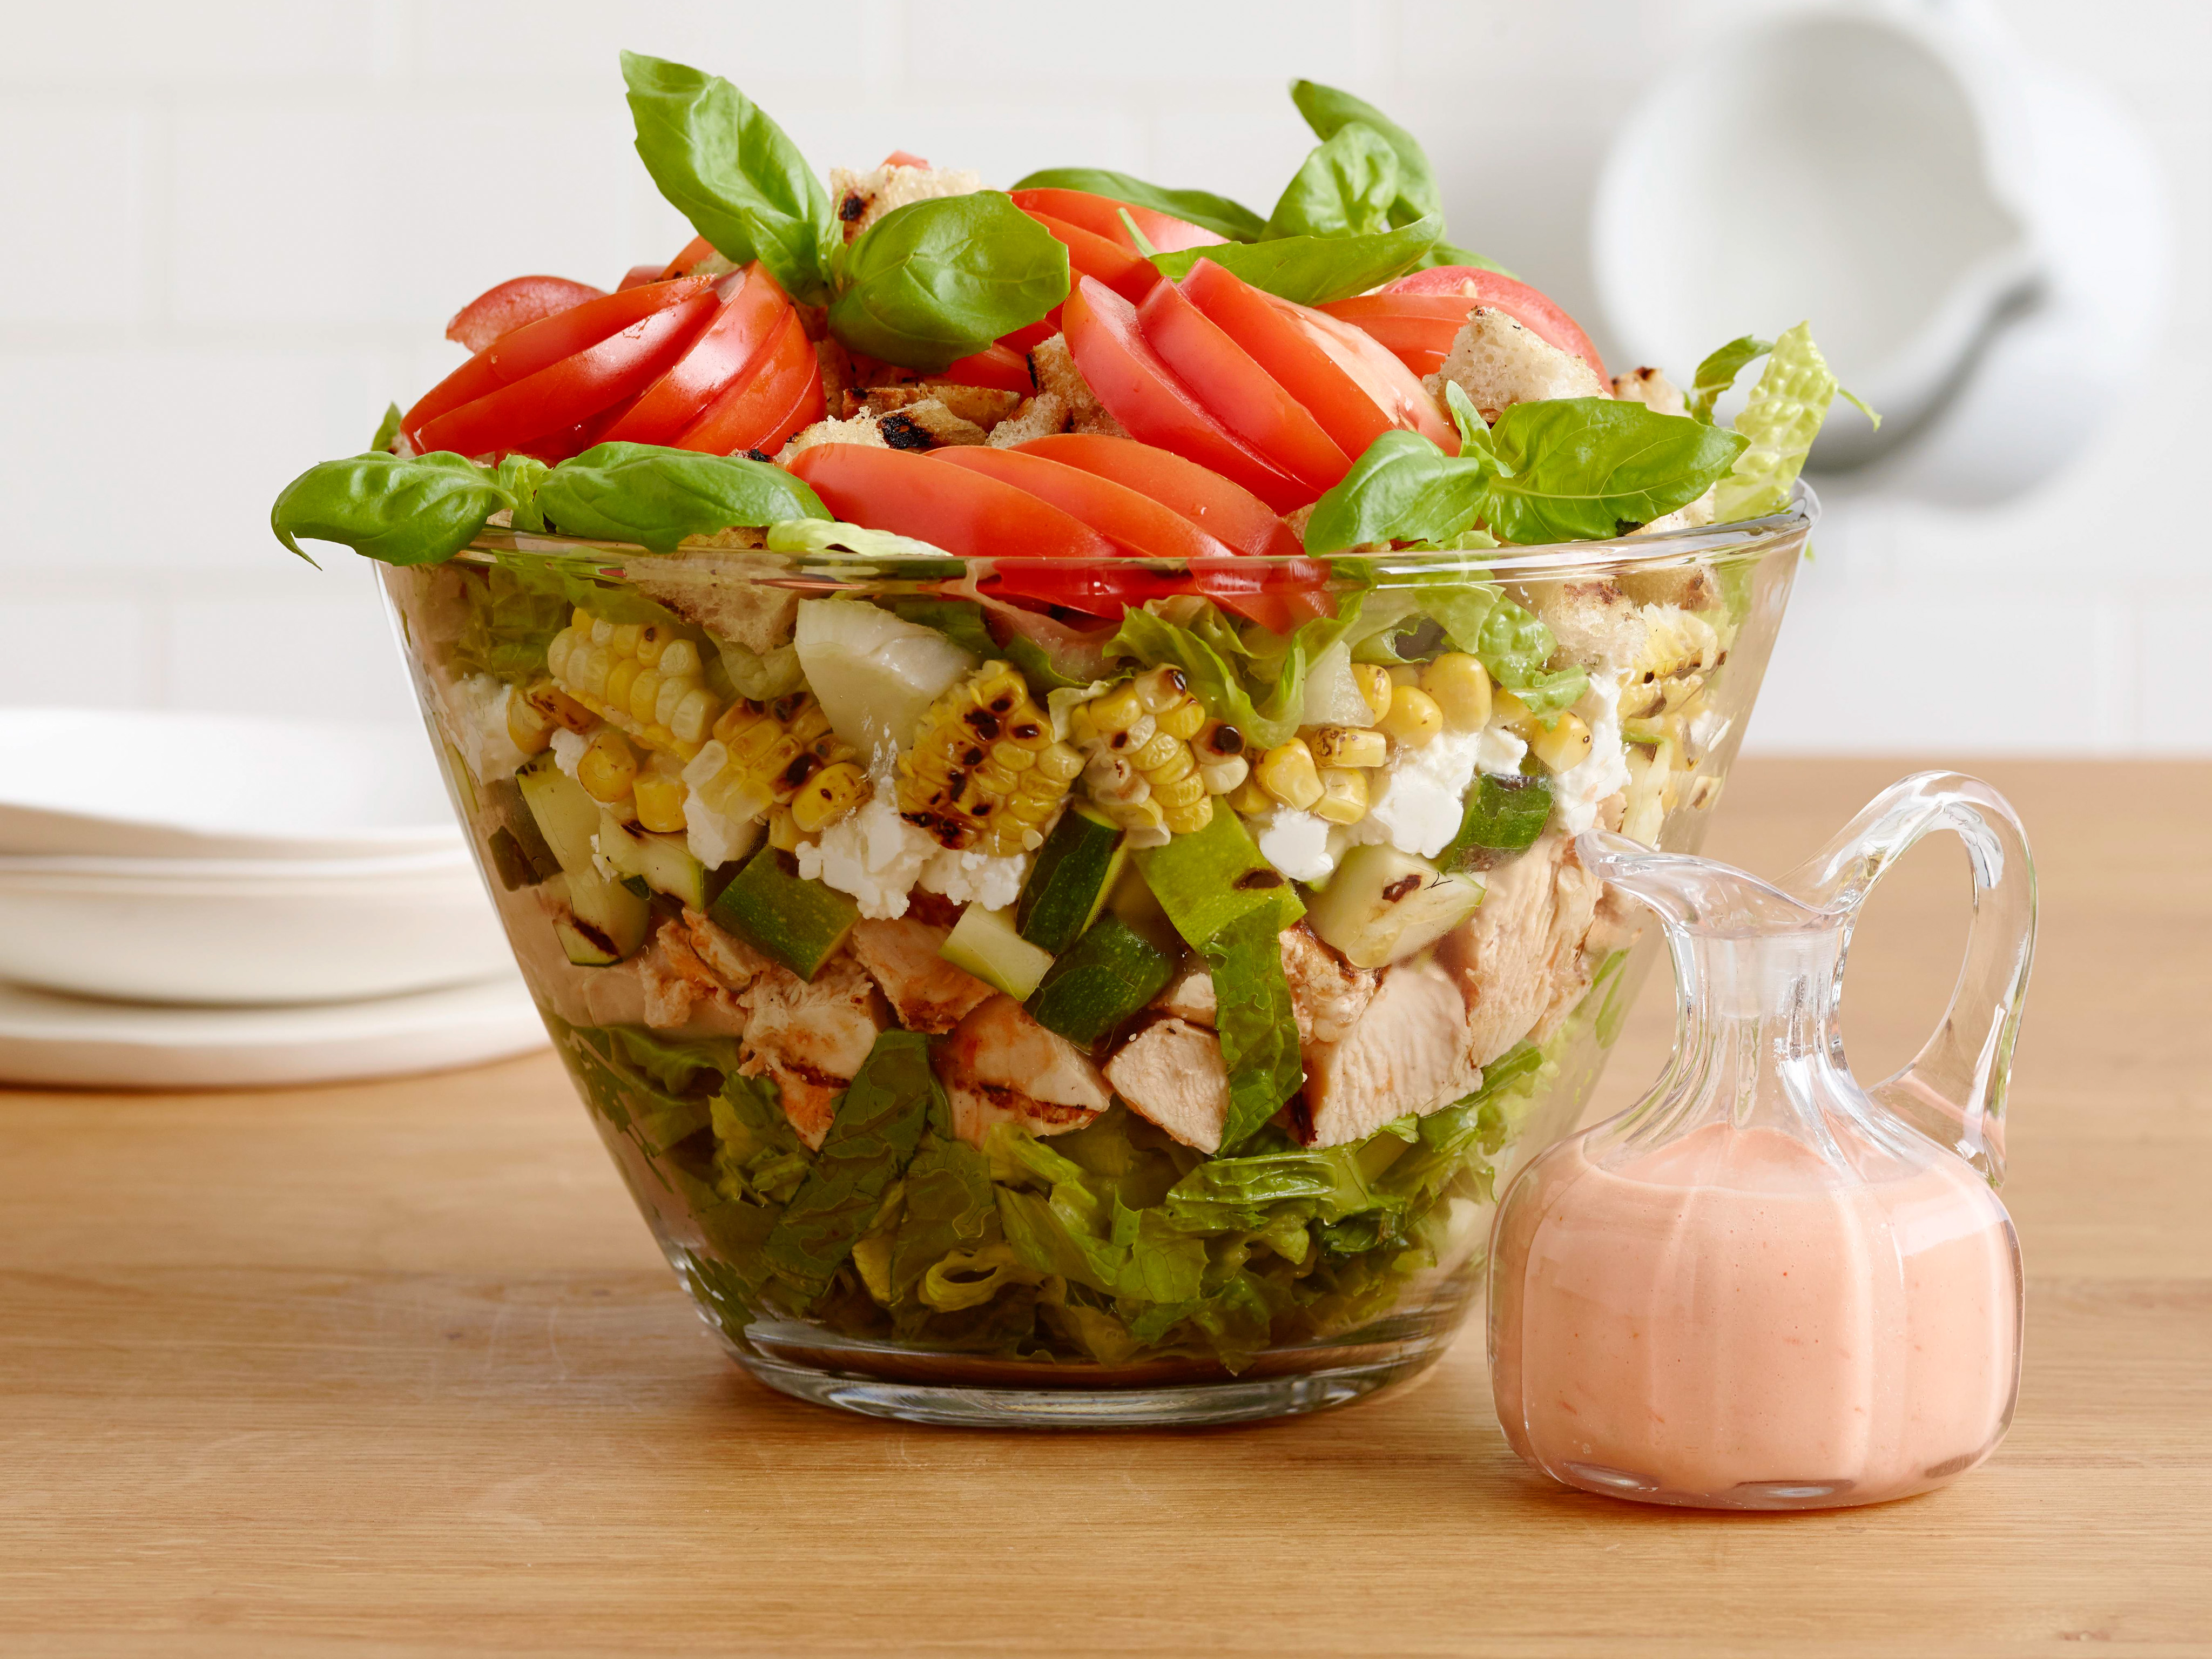 https://www.foodnetwork.com/content/dam/images/food/fullset/2014/12/16/1/FNK_Summer-Salad-with-Grilled-Chicken_s4x3.jpg